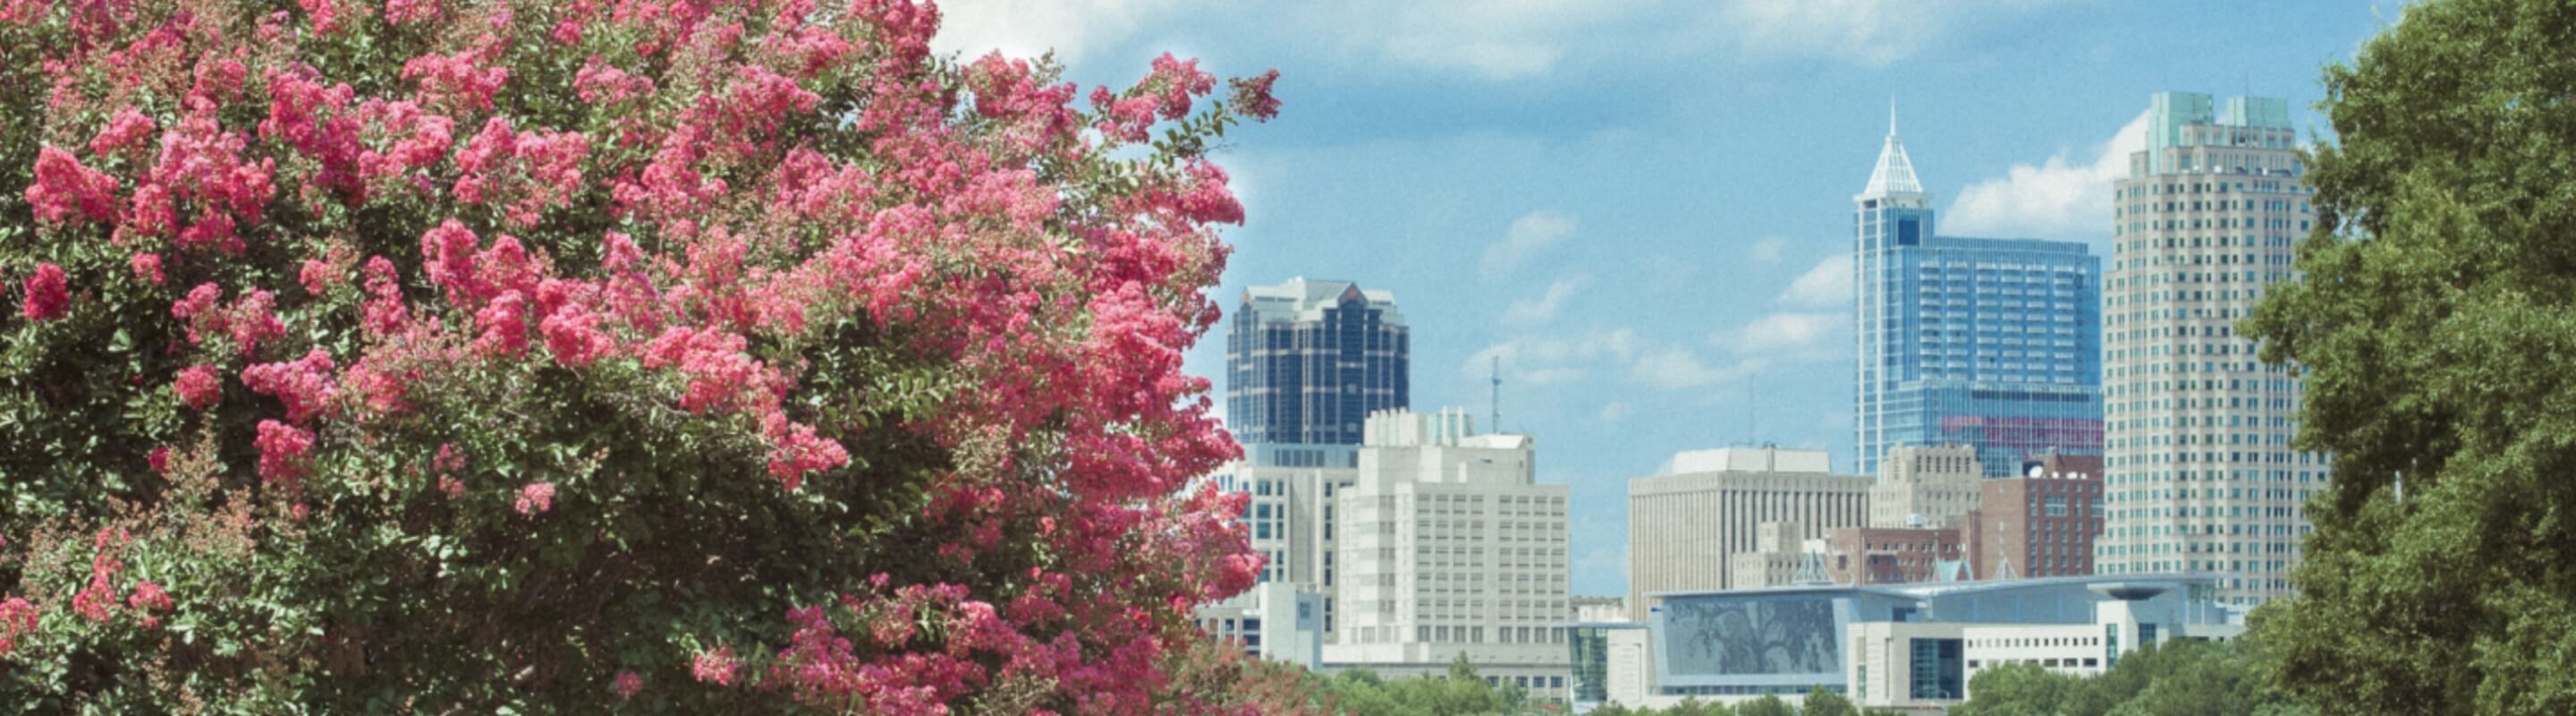 Raleigh, NC skyline